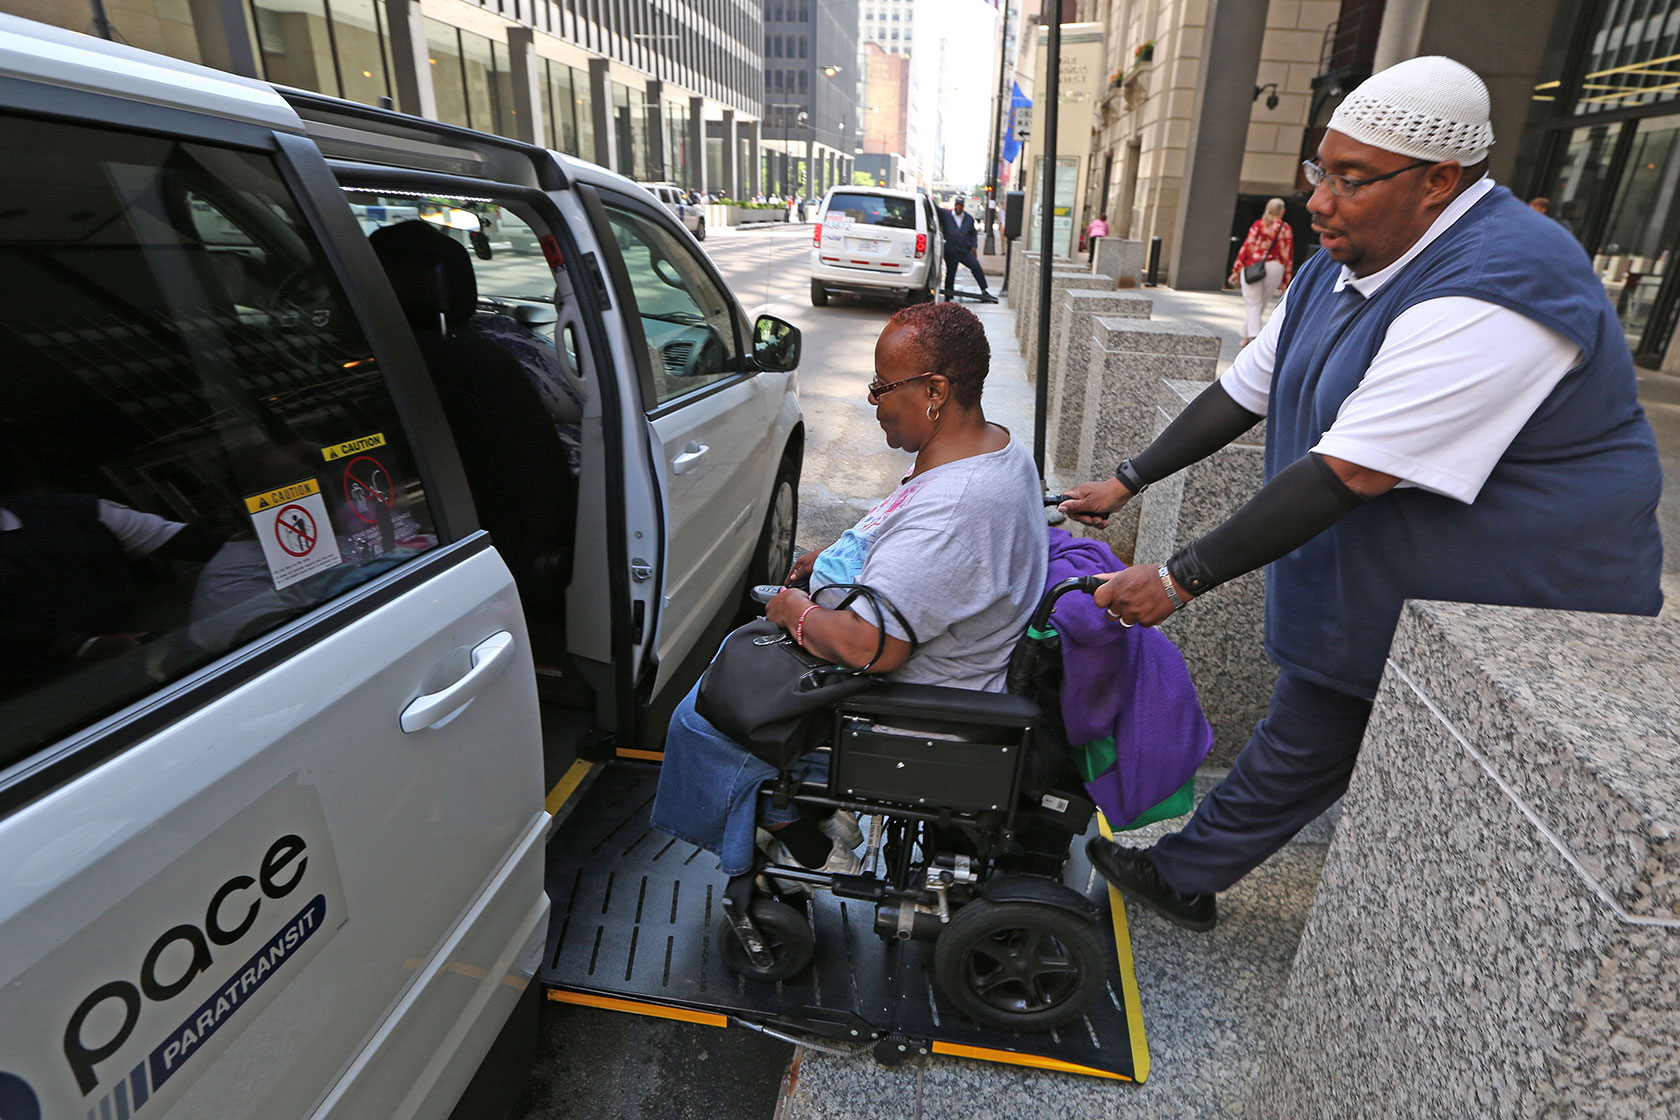 Photo shows a man pushing a woman in a wheelchair into a van